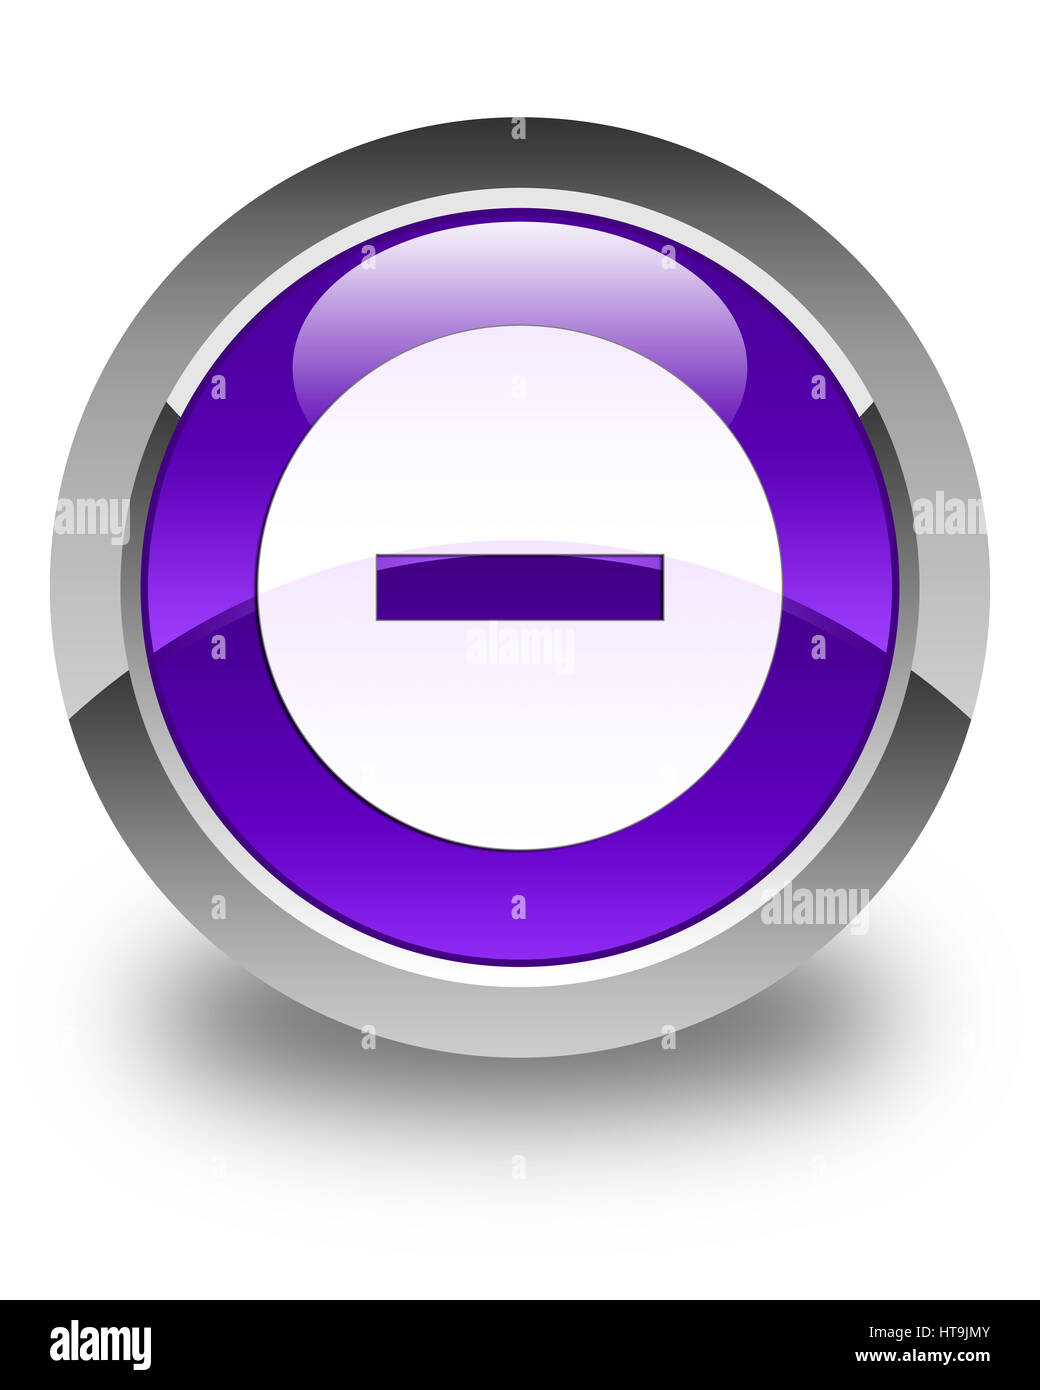 Icône Annuler isolé sur bouton rond violet brillant abstract illustration Banque D'Images